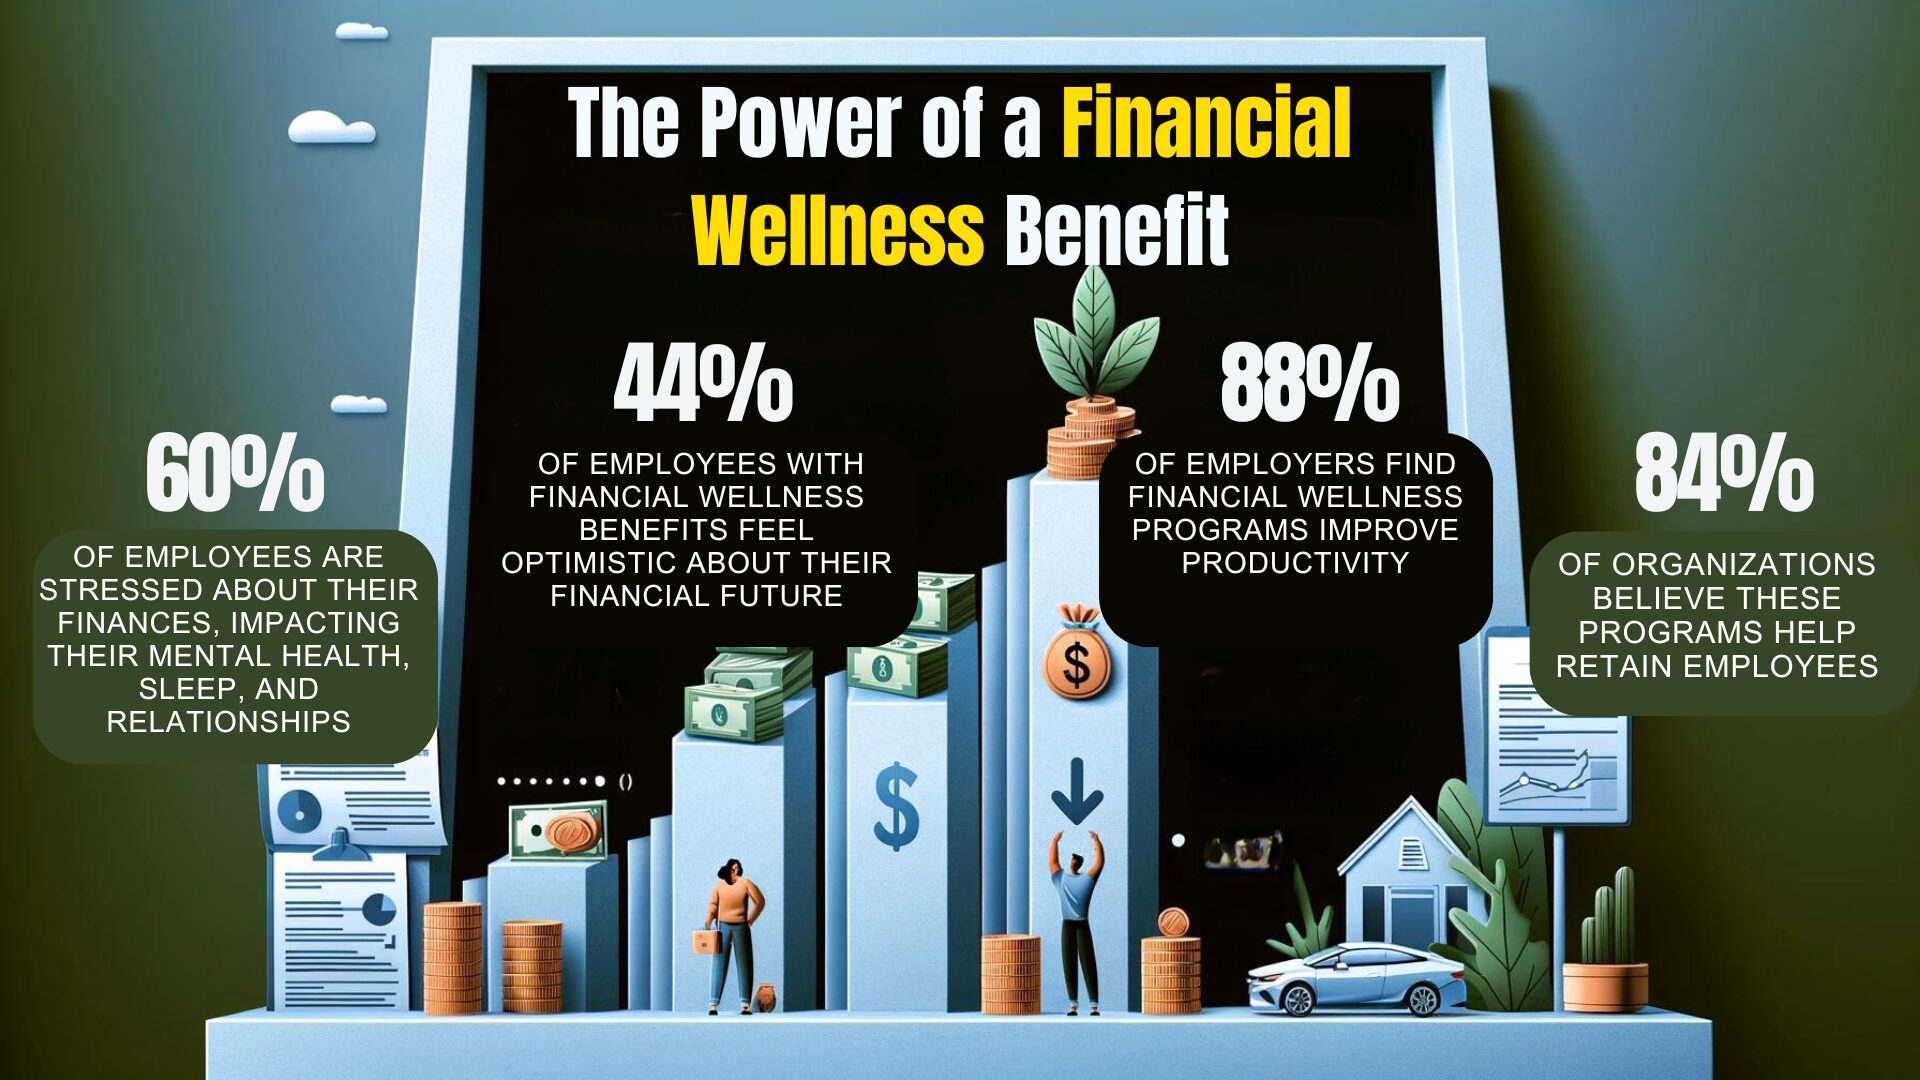 The Power of a Financial Wellness Benefit